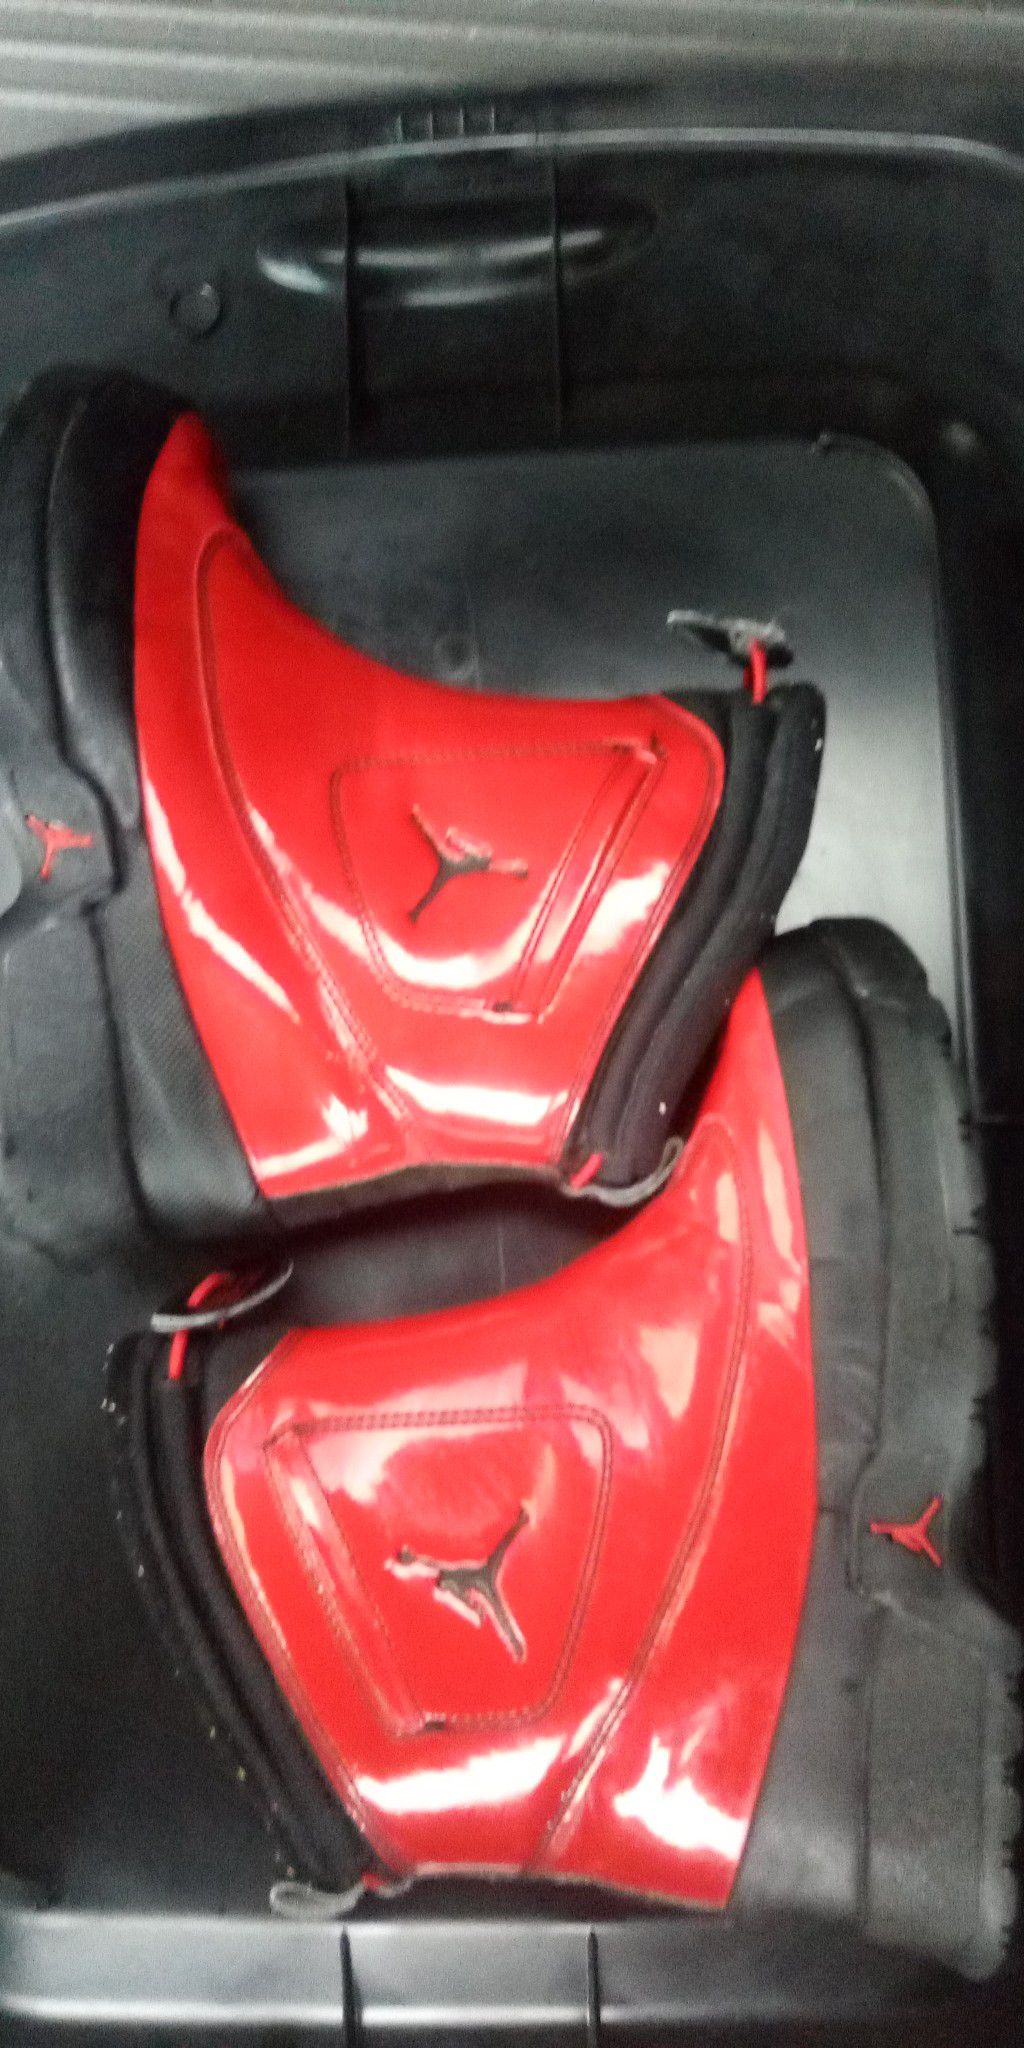 Jordan's red rubber boots